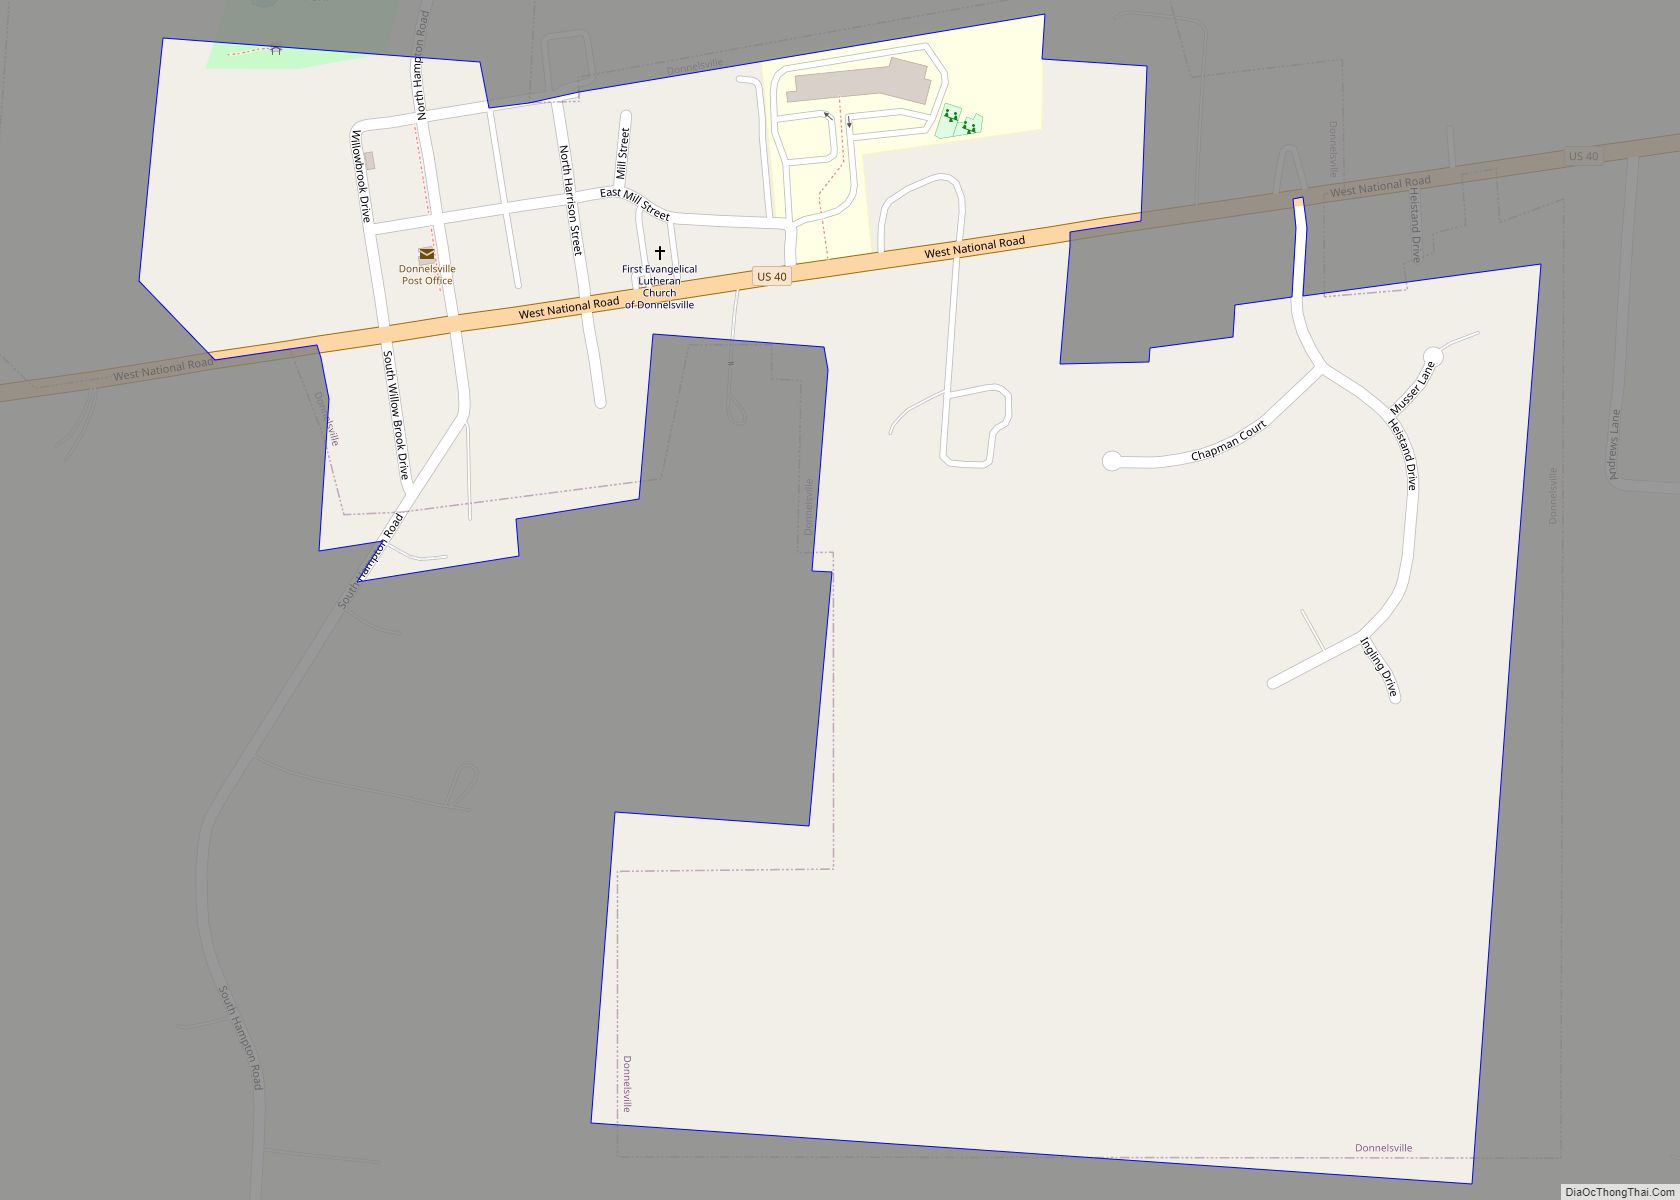 Map of Donnelsville village